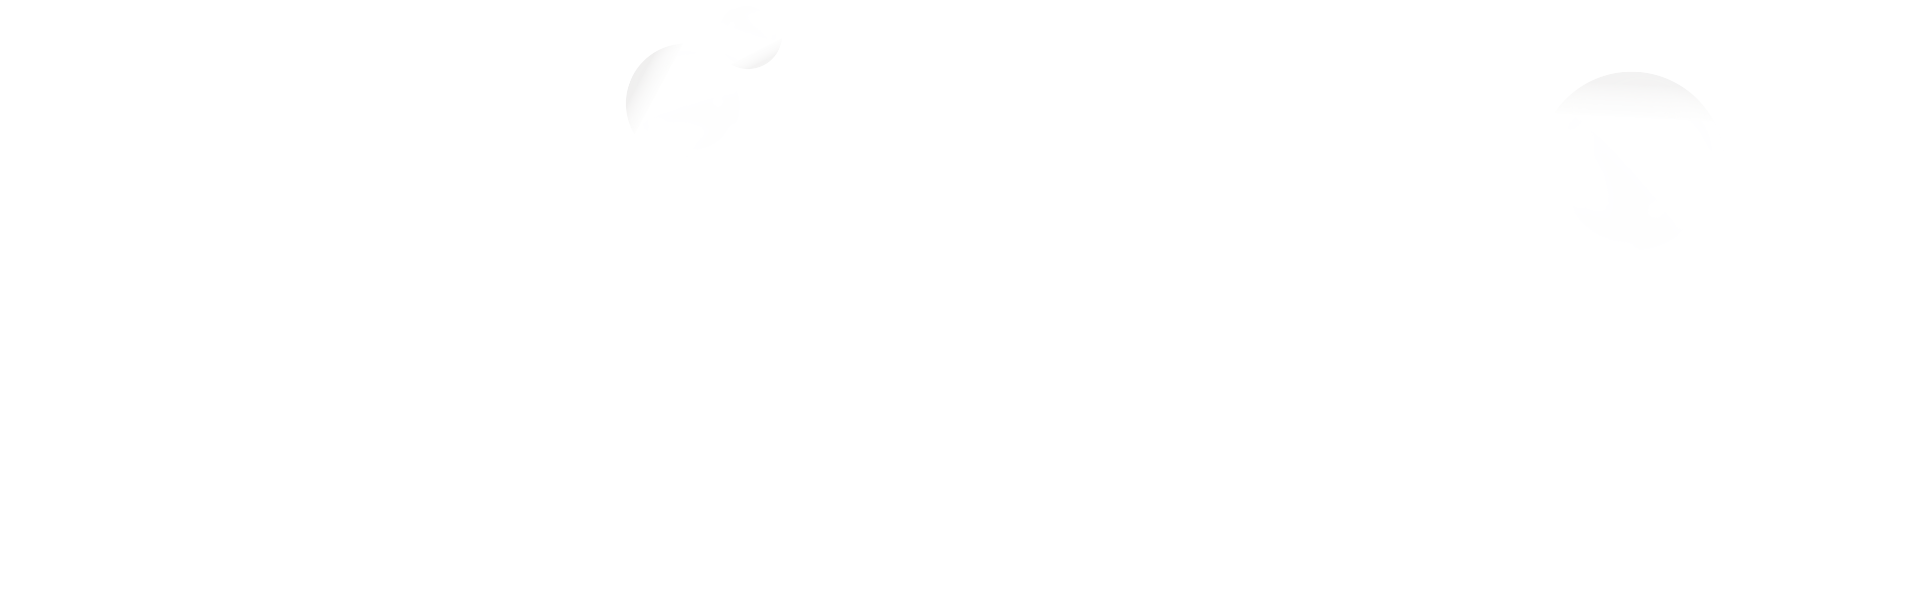 Microbubbles: in bubble font